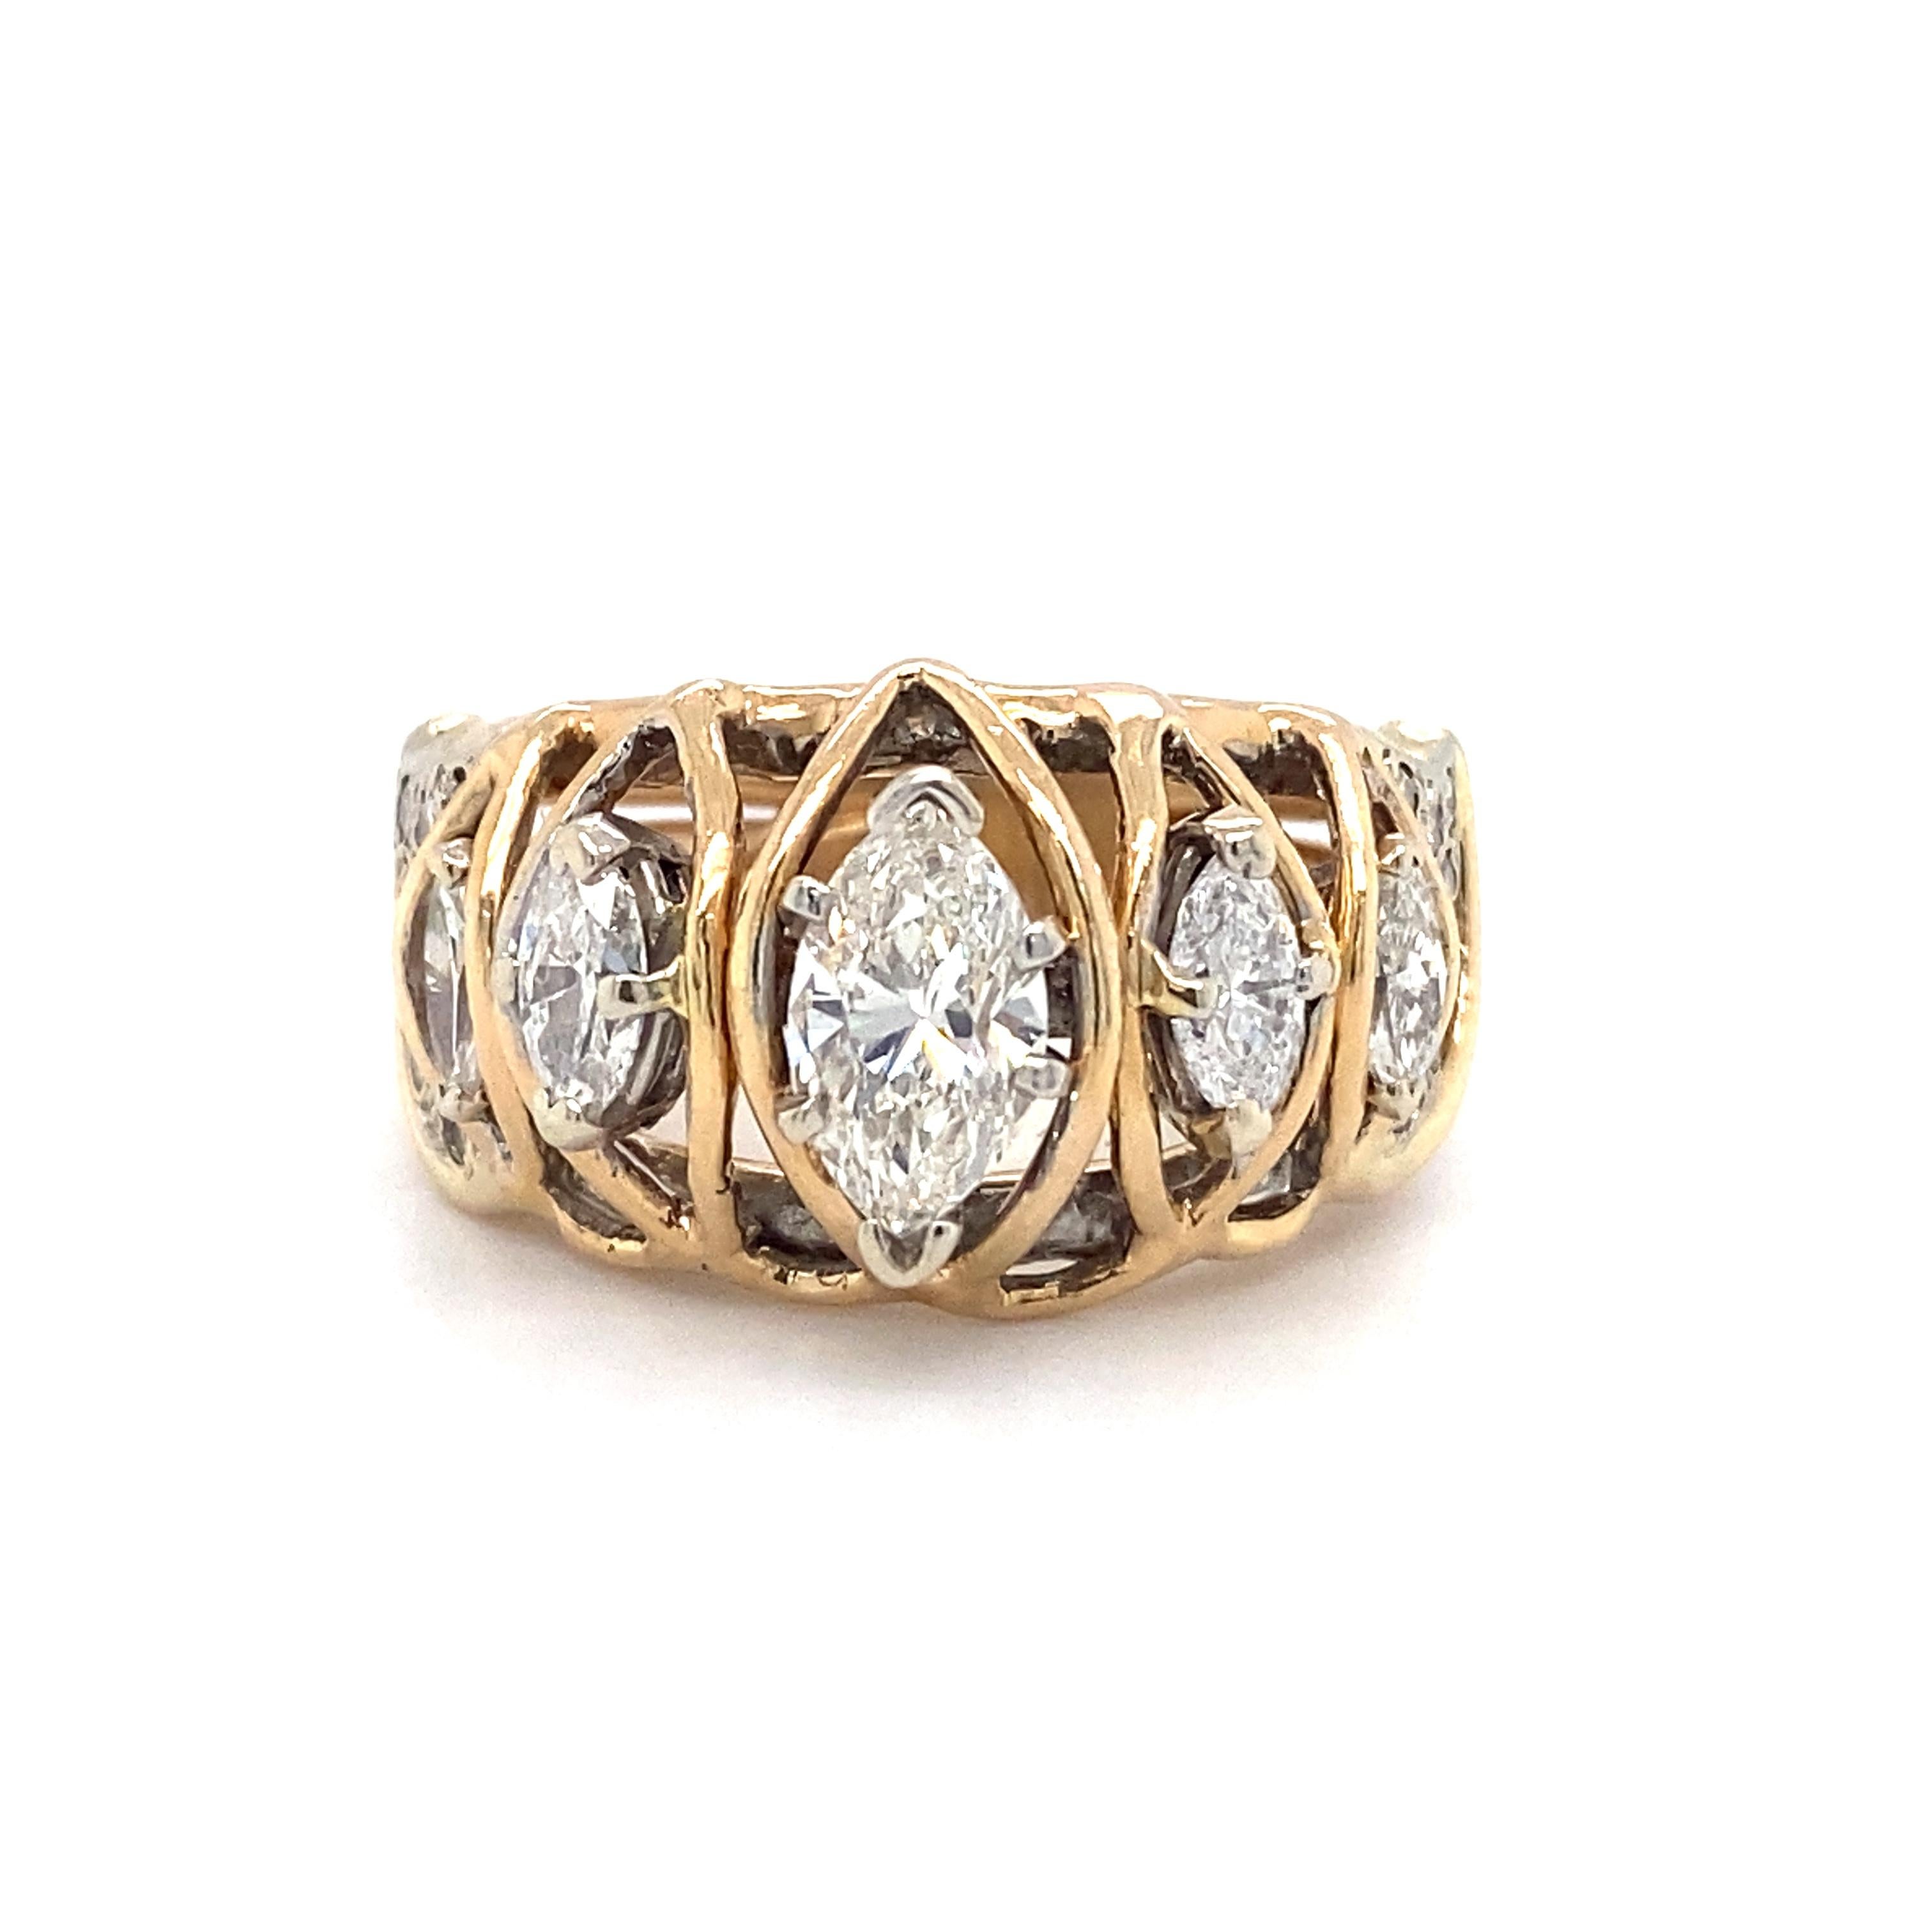 Women's or Men's Circa 1970s 1.60 Carat Marquise Diamond Retro Ring in 14 Karat Gold For Sale